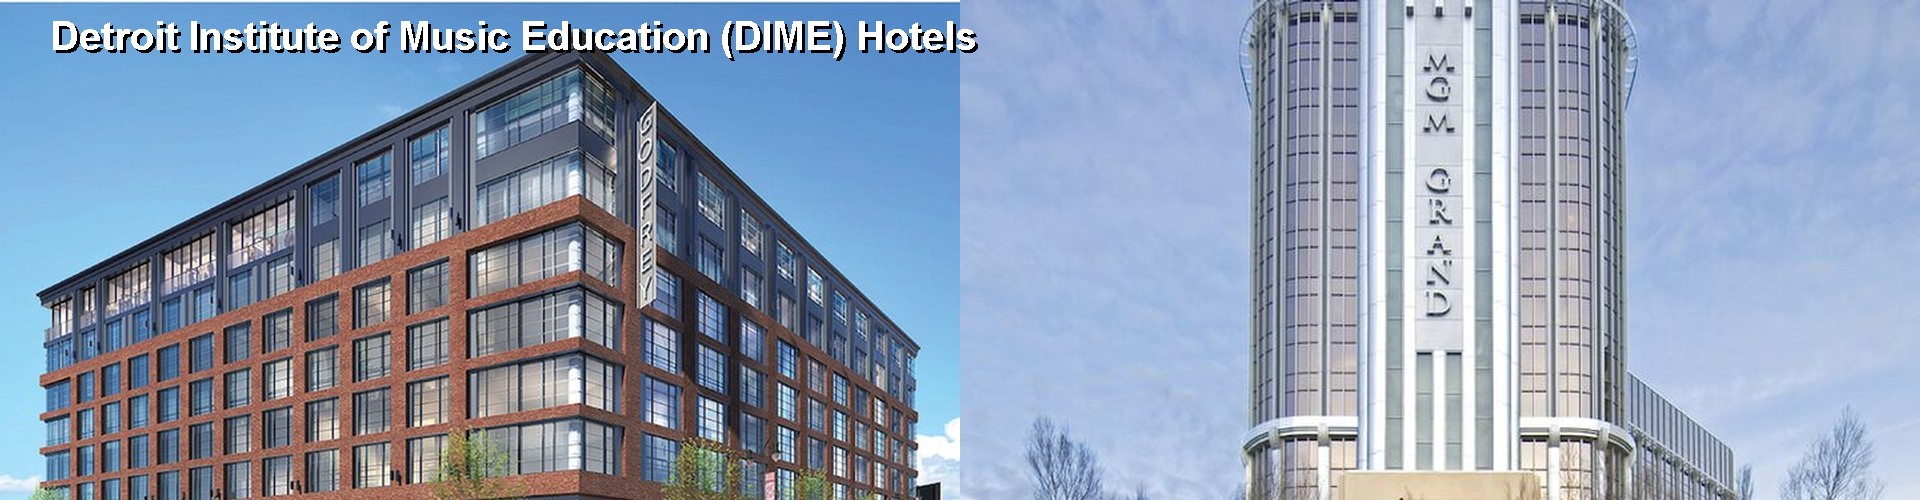 5 Best Hotels near Detroit Institute of Music Education (DIME)